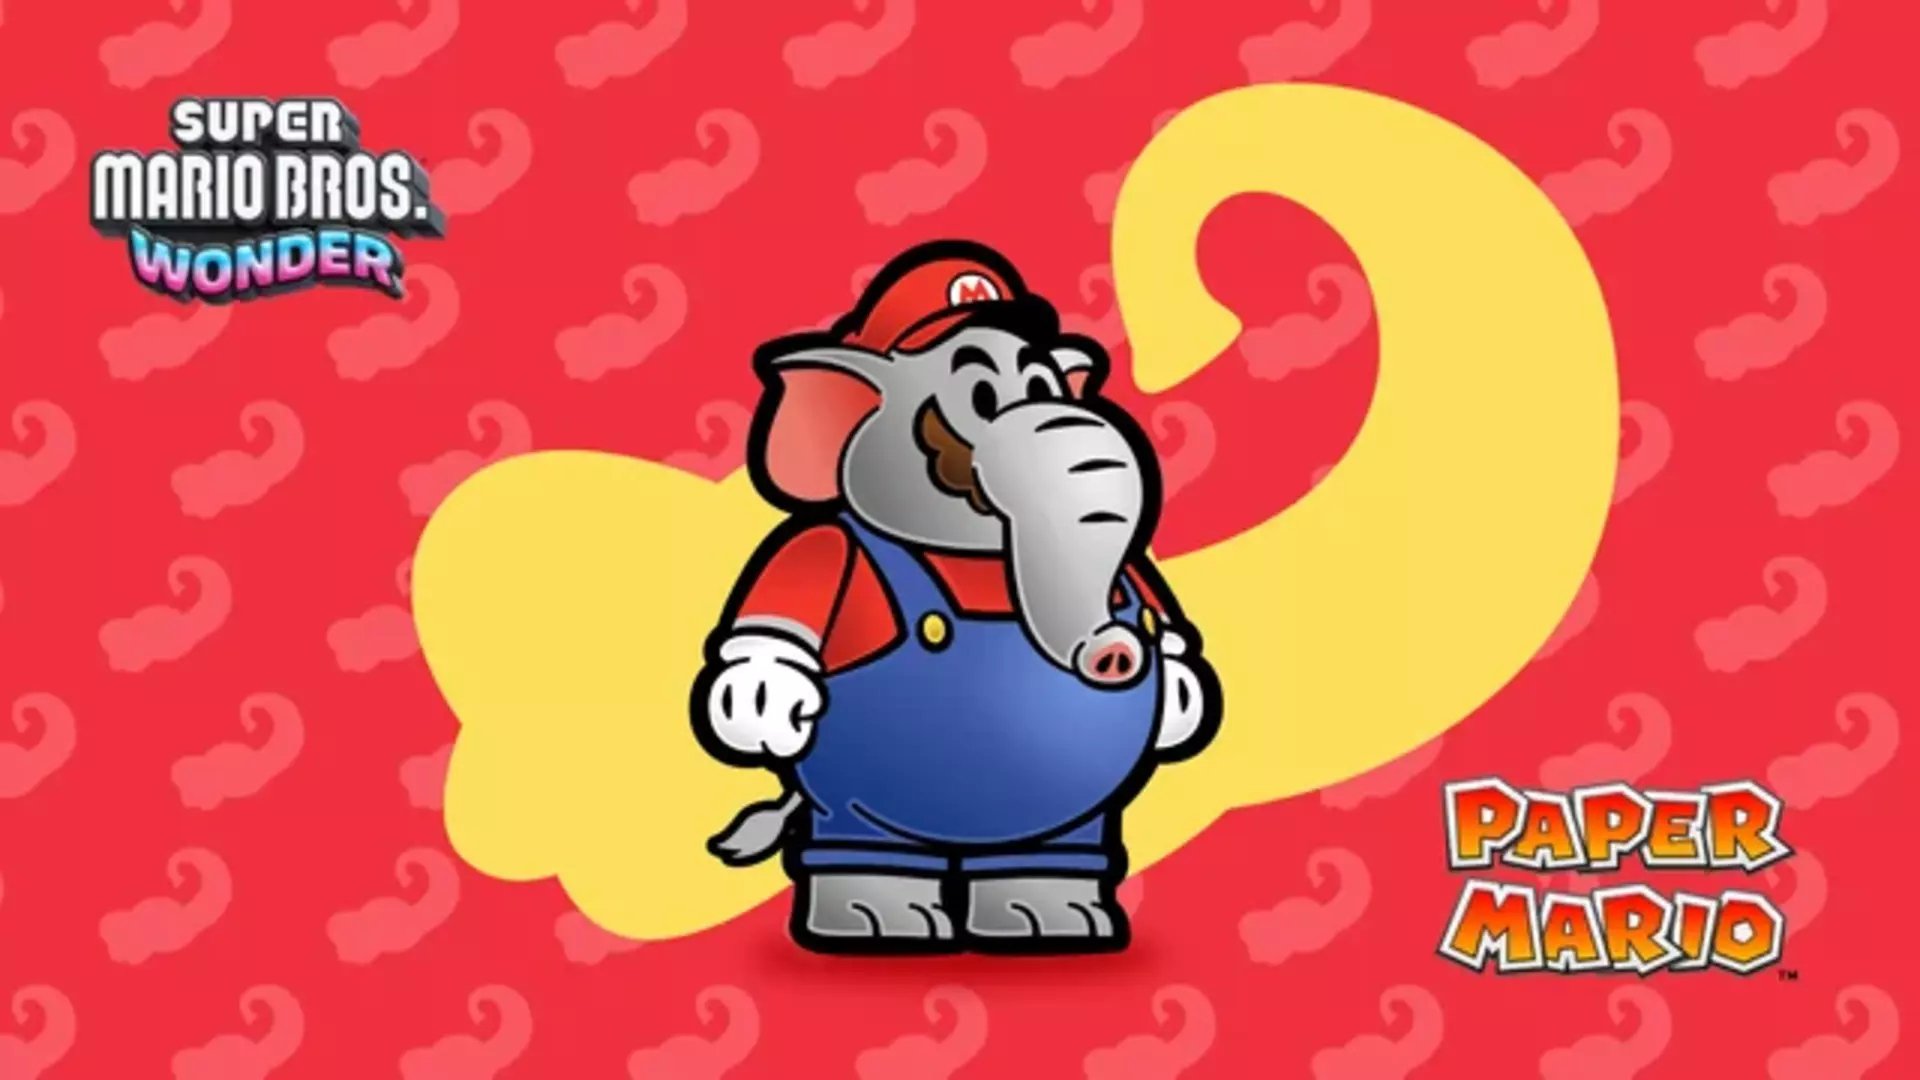 Super Mario Bros. Wonder art - Elephant Mario, Daisy, more